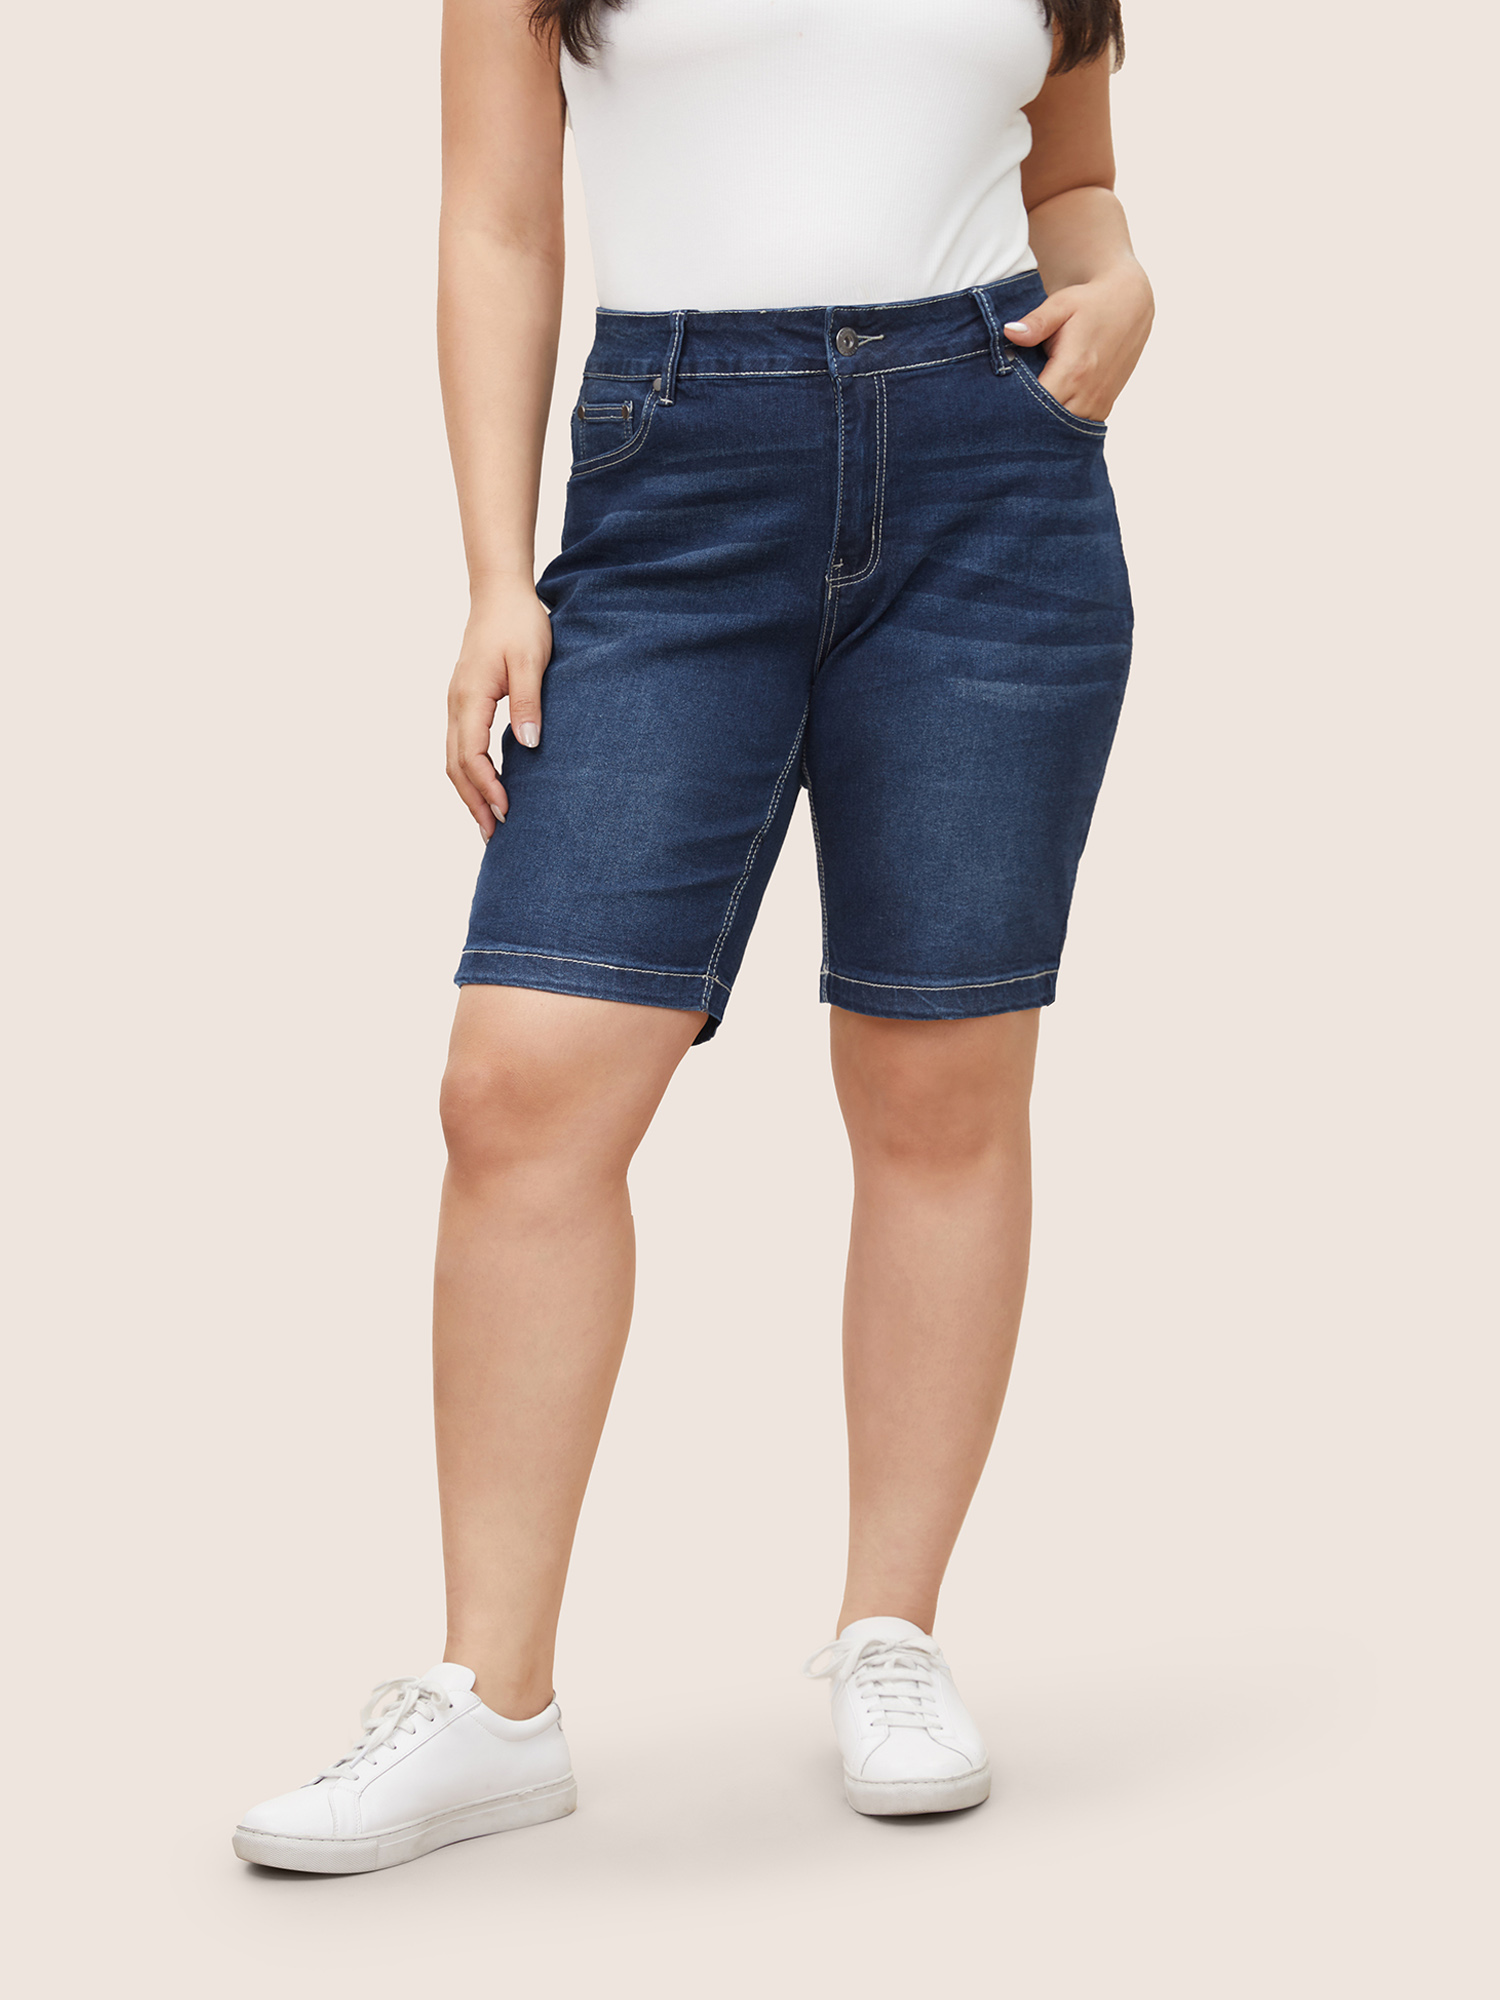 

Plus Size Very Stretchy High Rise Dark Wash Denim Shorts Women Indigo Casual Plain High stretch Slanted pocket Jeans BloomChic